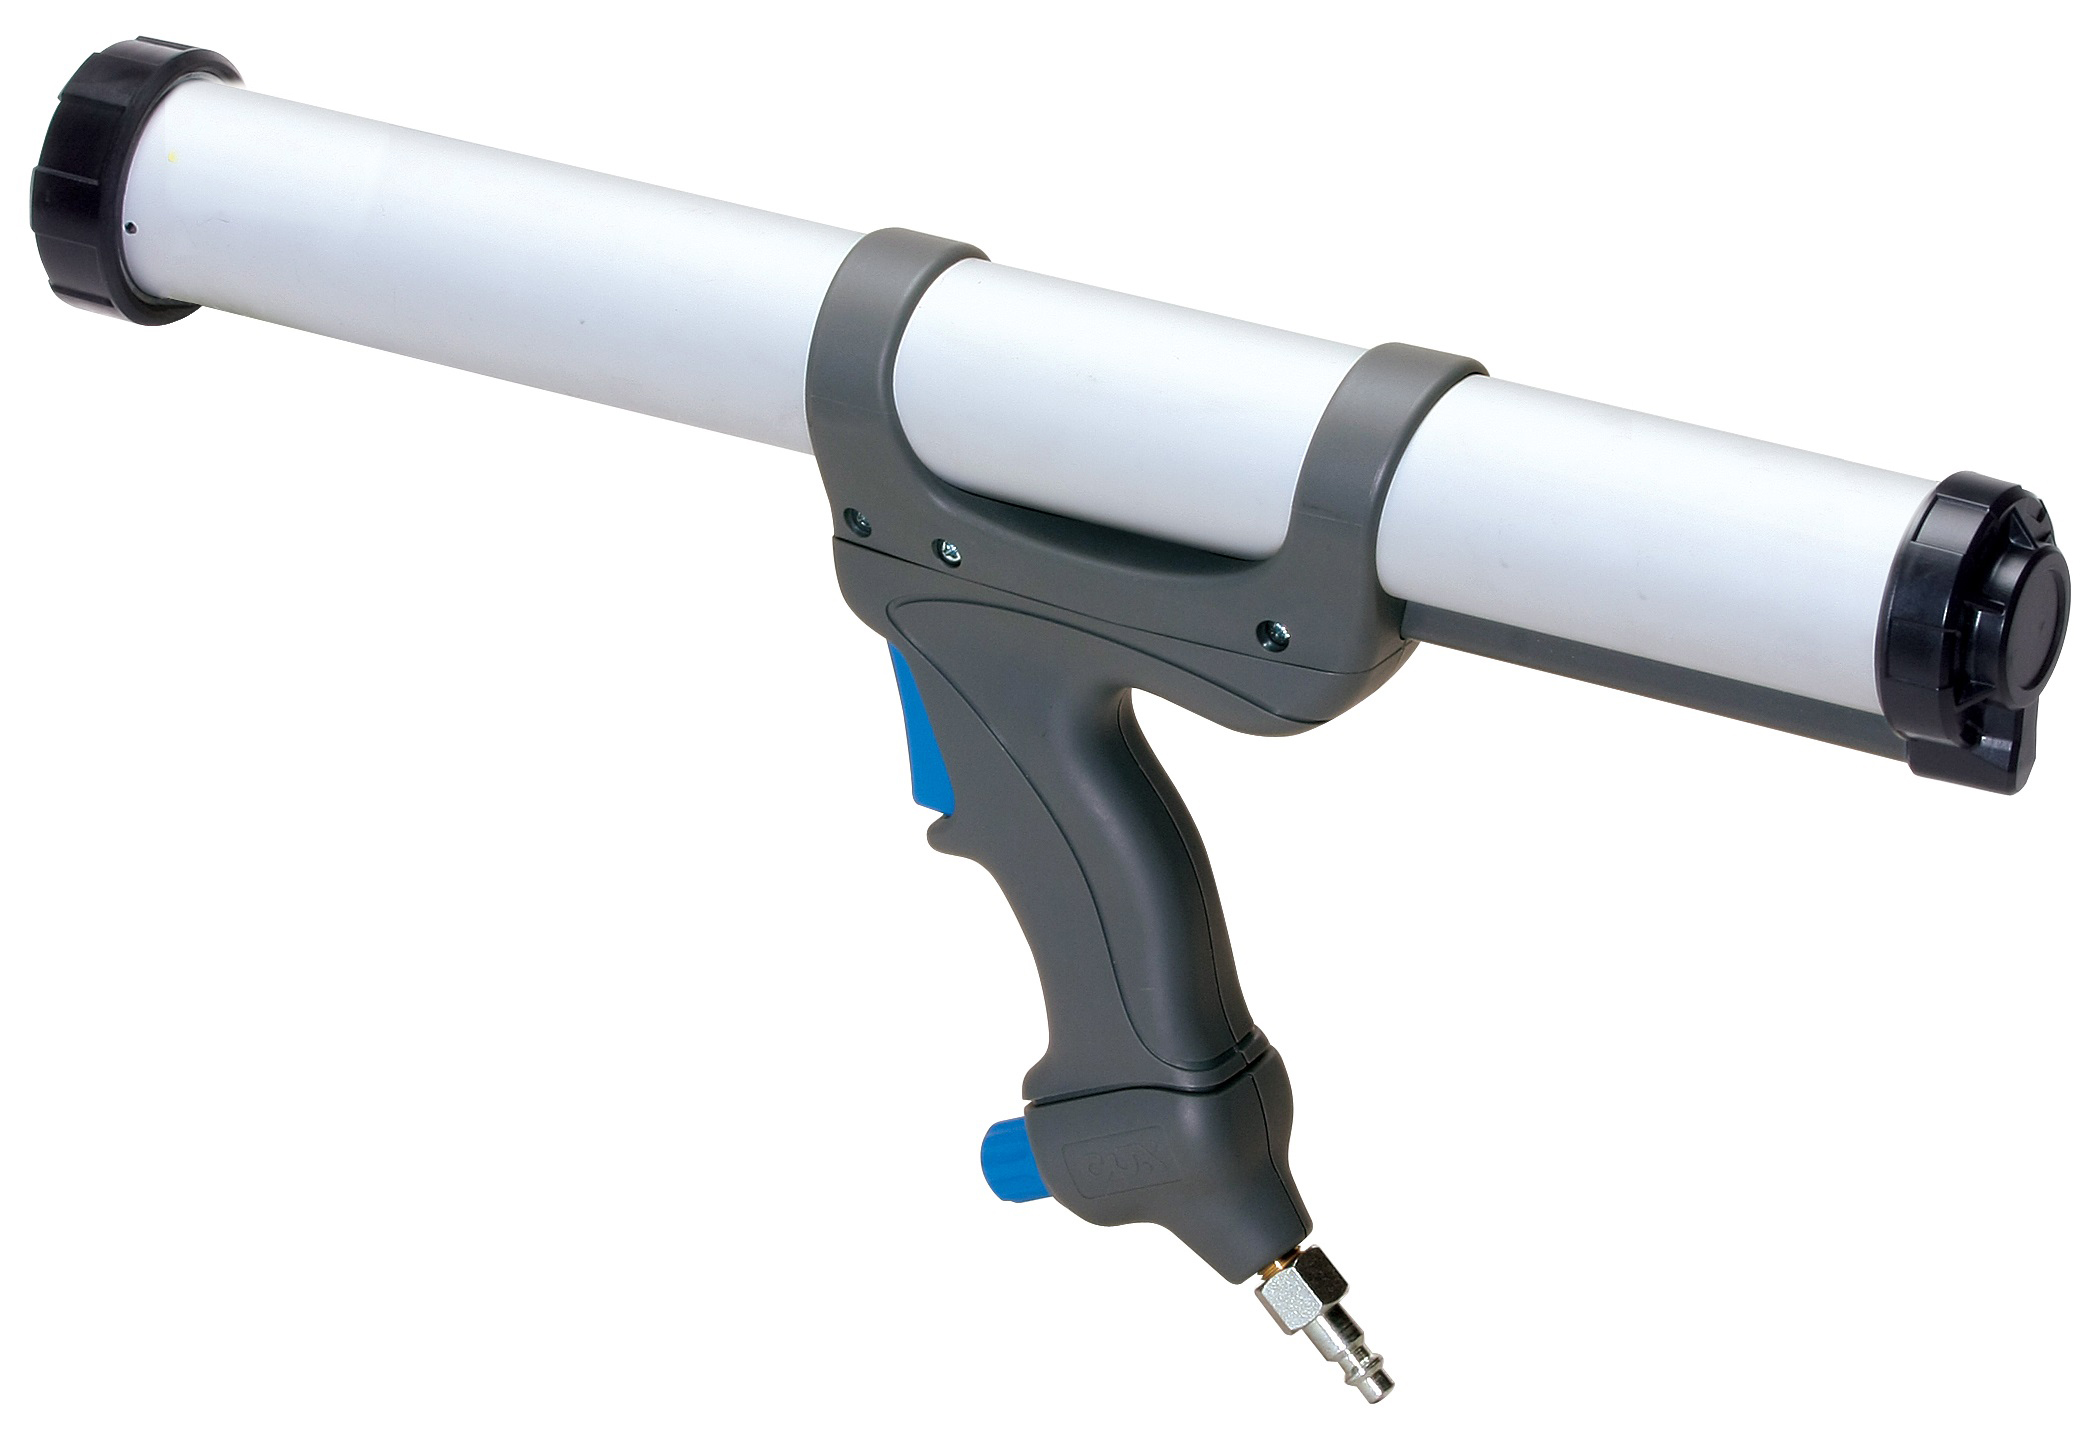 Pneumatic Sealant Caulking Gun Air Sachet Dispenser Adhensive Applicator 600ML 